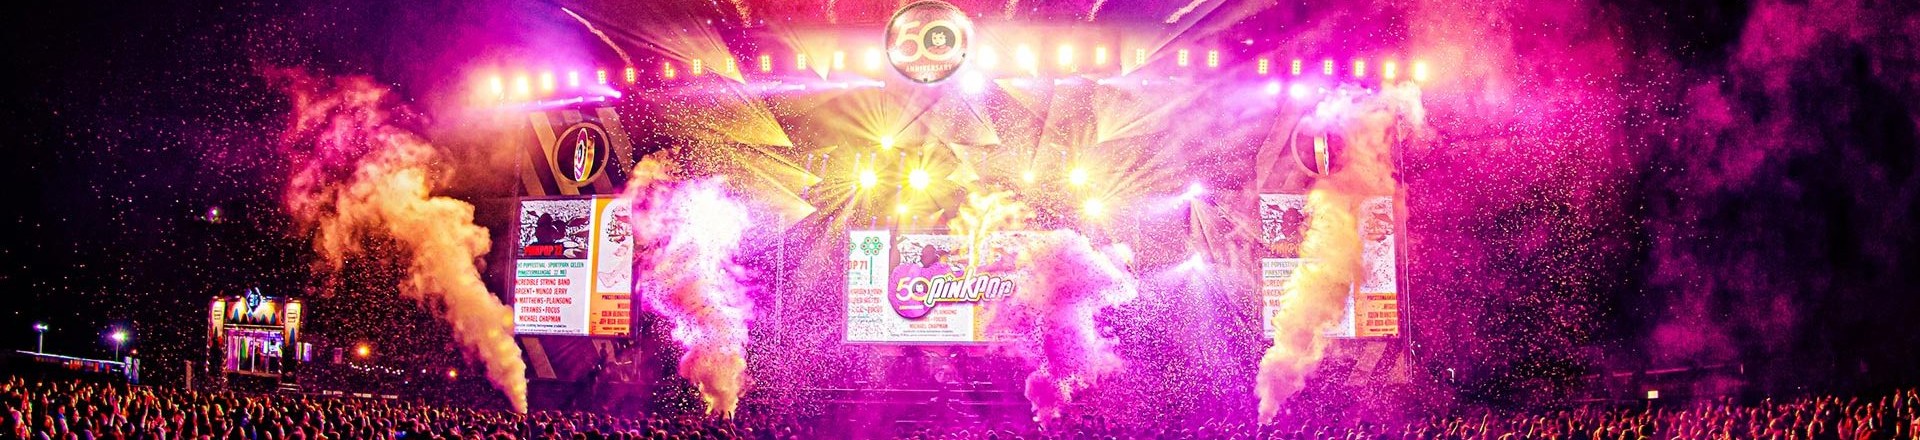 Pinkpop Festival w Holandii